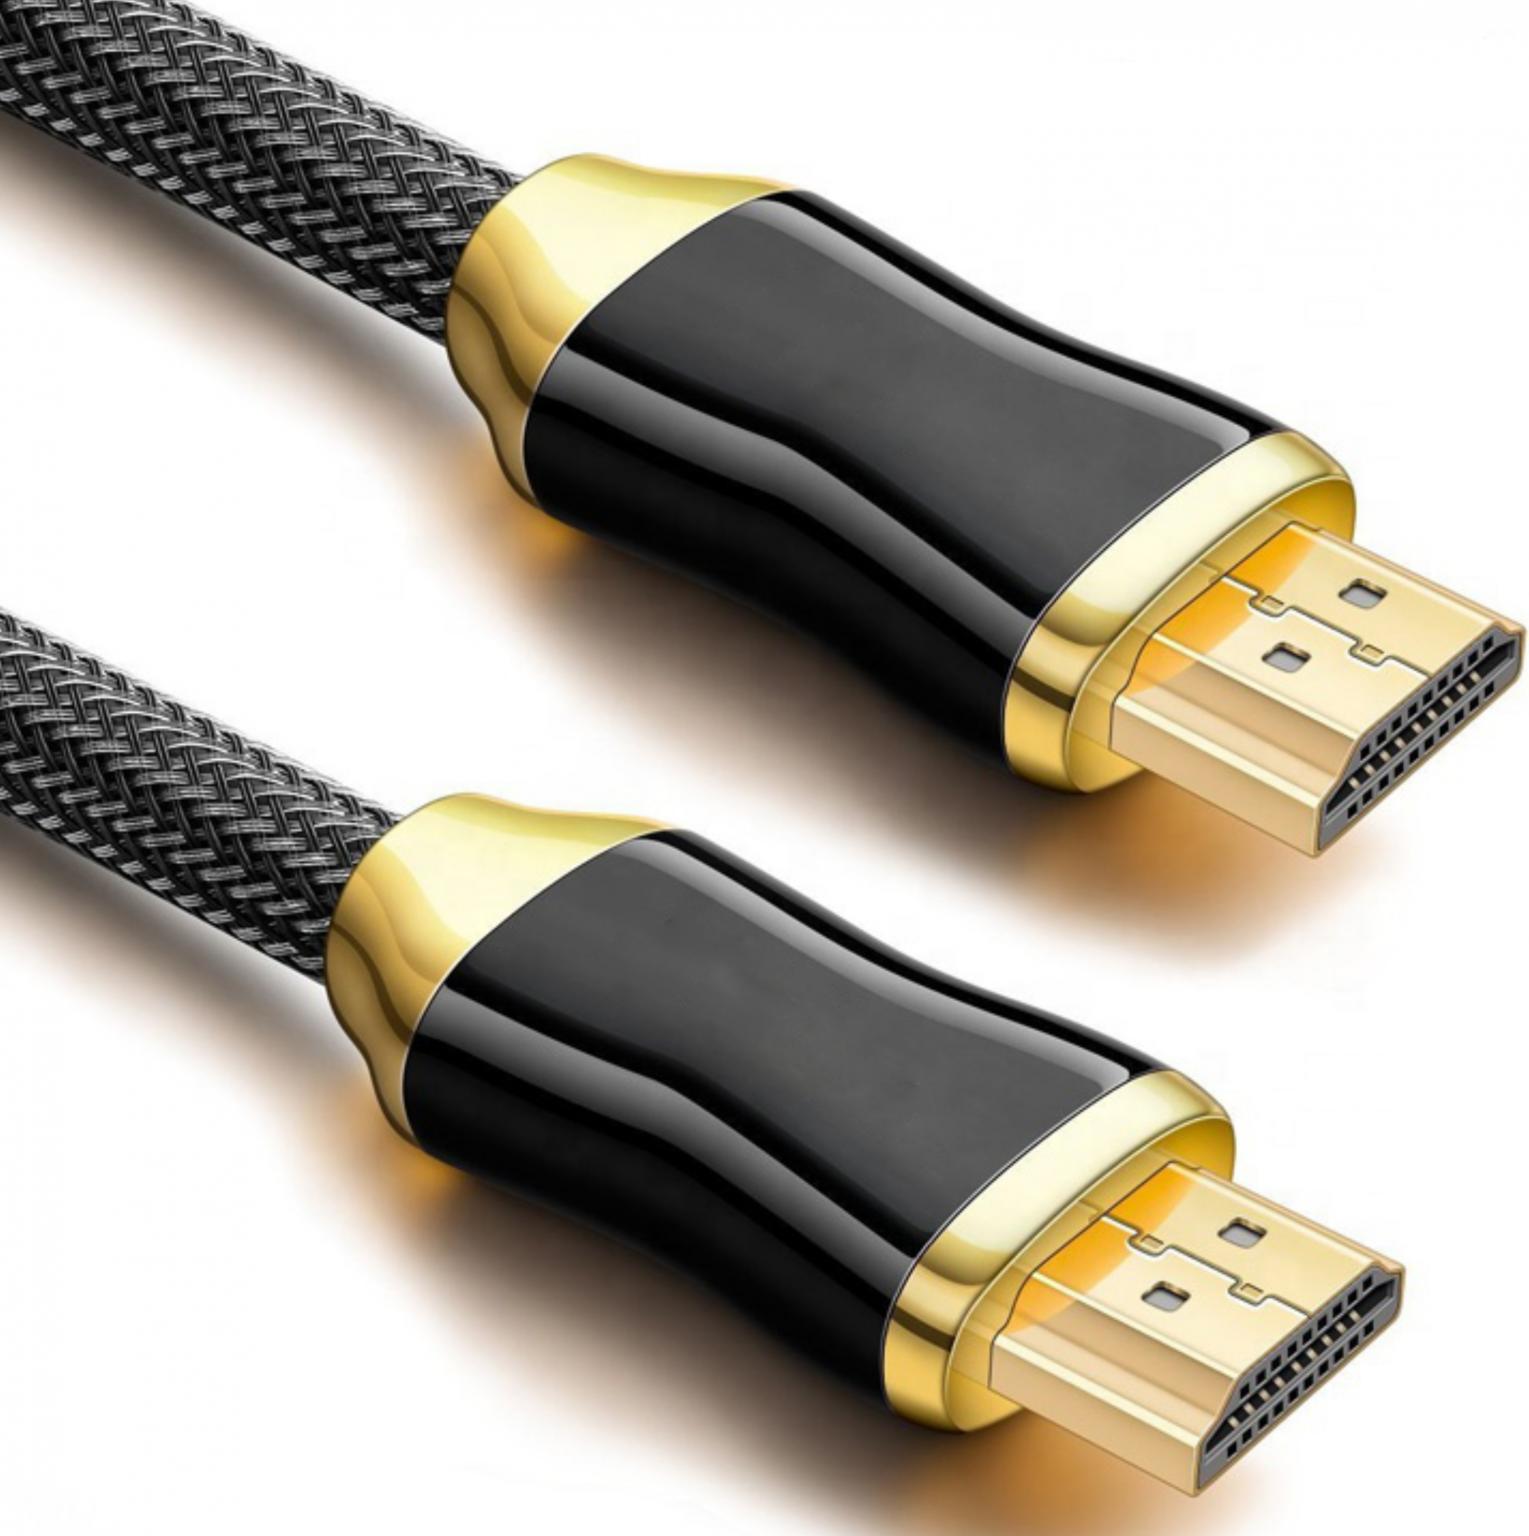 vleet gebonden Afstoten HDMI kabel - Versie: 2.0 Premium High Speed, Verguld: Ja, Aansluiting 1:  HDMI A male, Aansluiting 2: HDMI A male, Lengte: 5 meter.